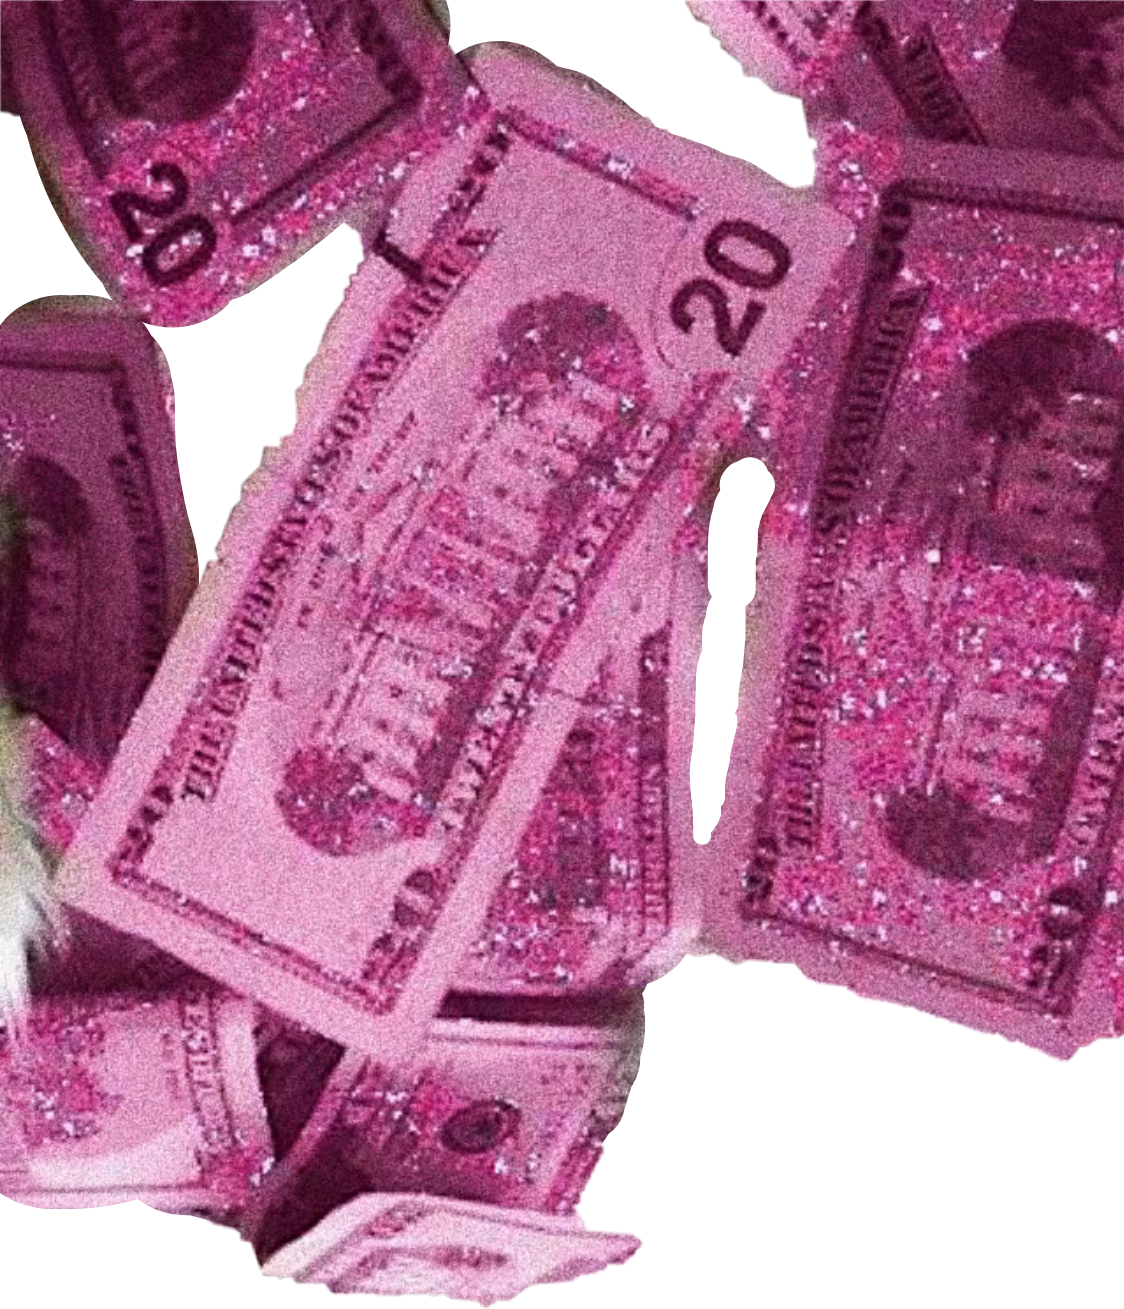 Aesthetic Pink Glitter Money Largest Wallpaper Portal